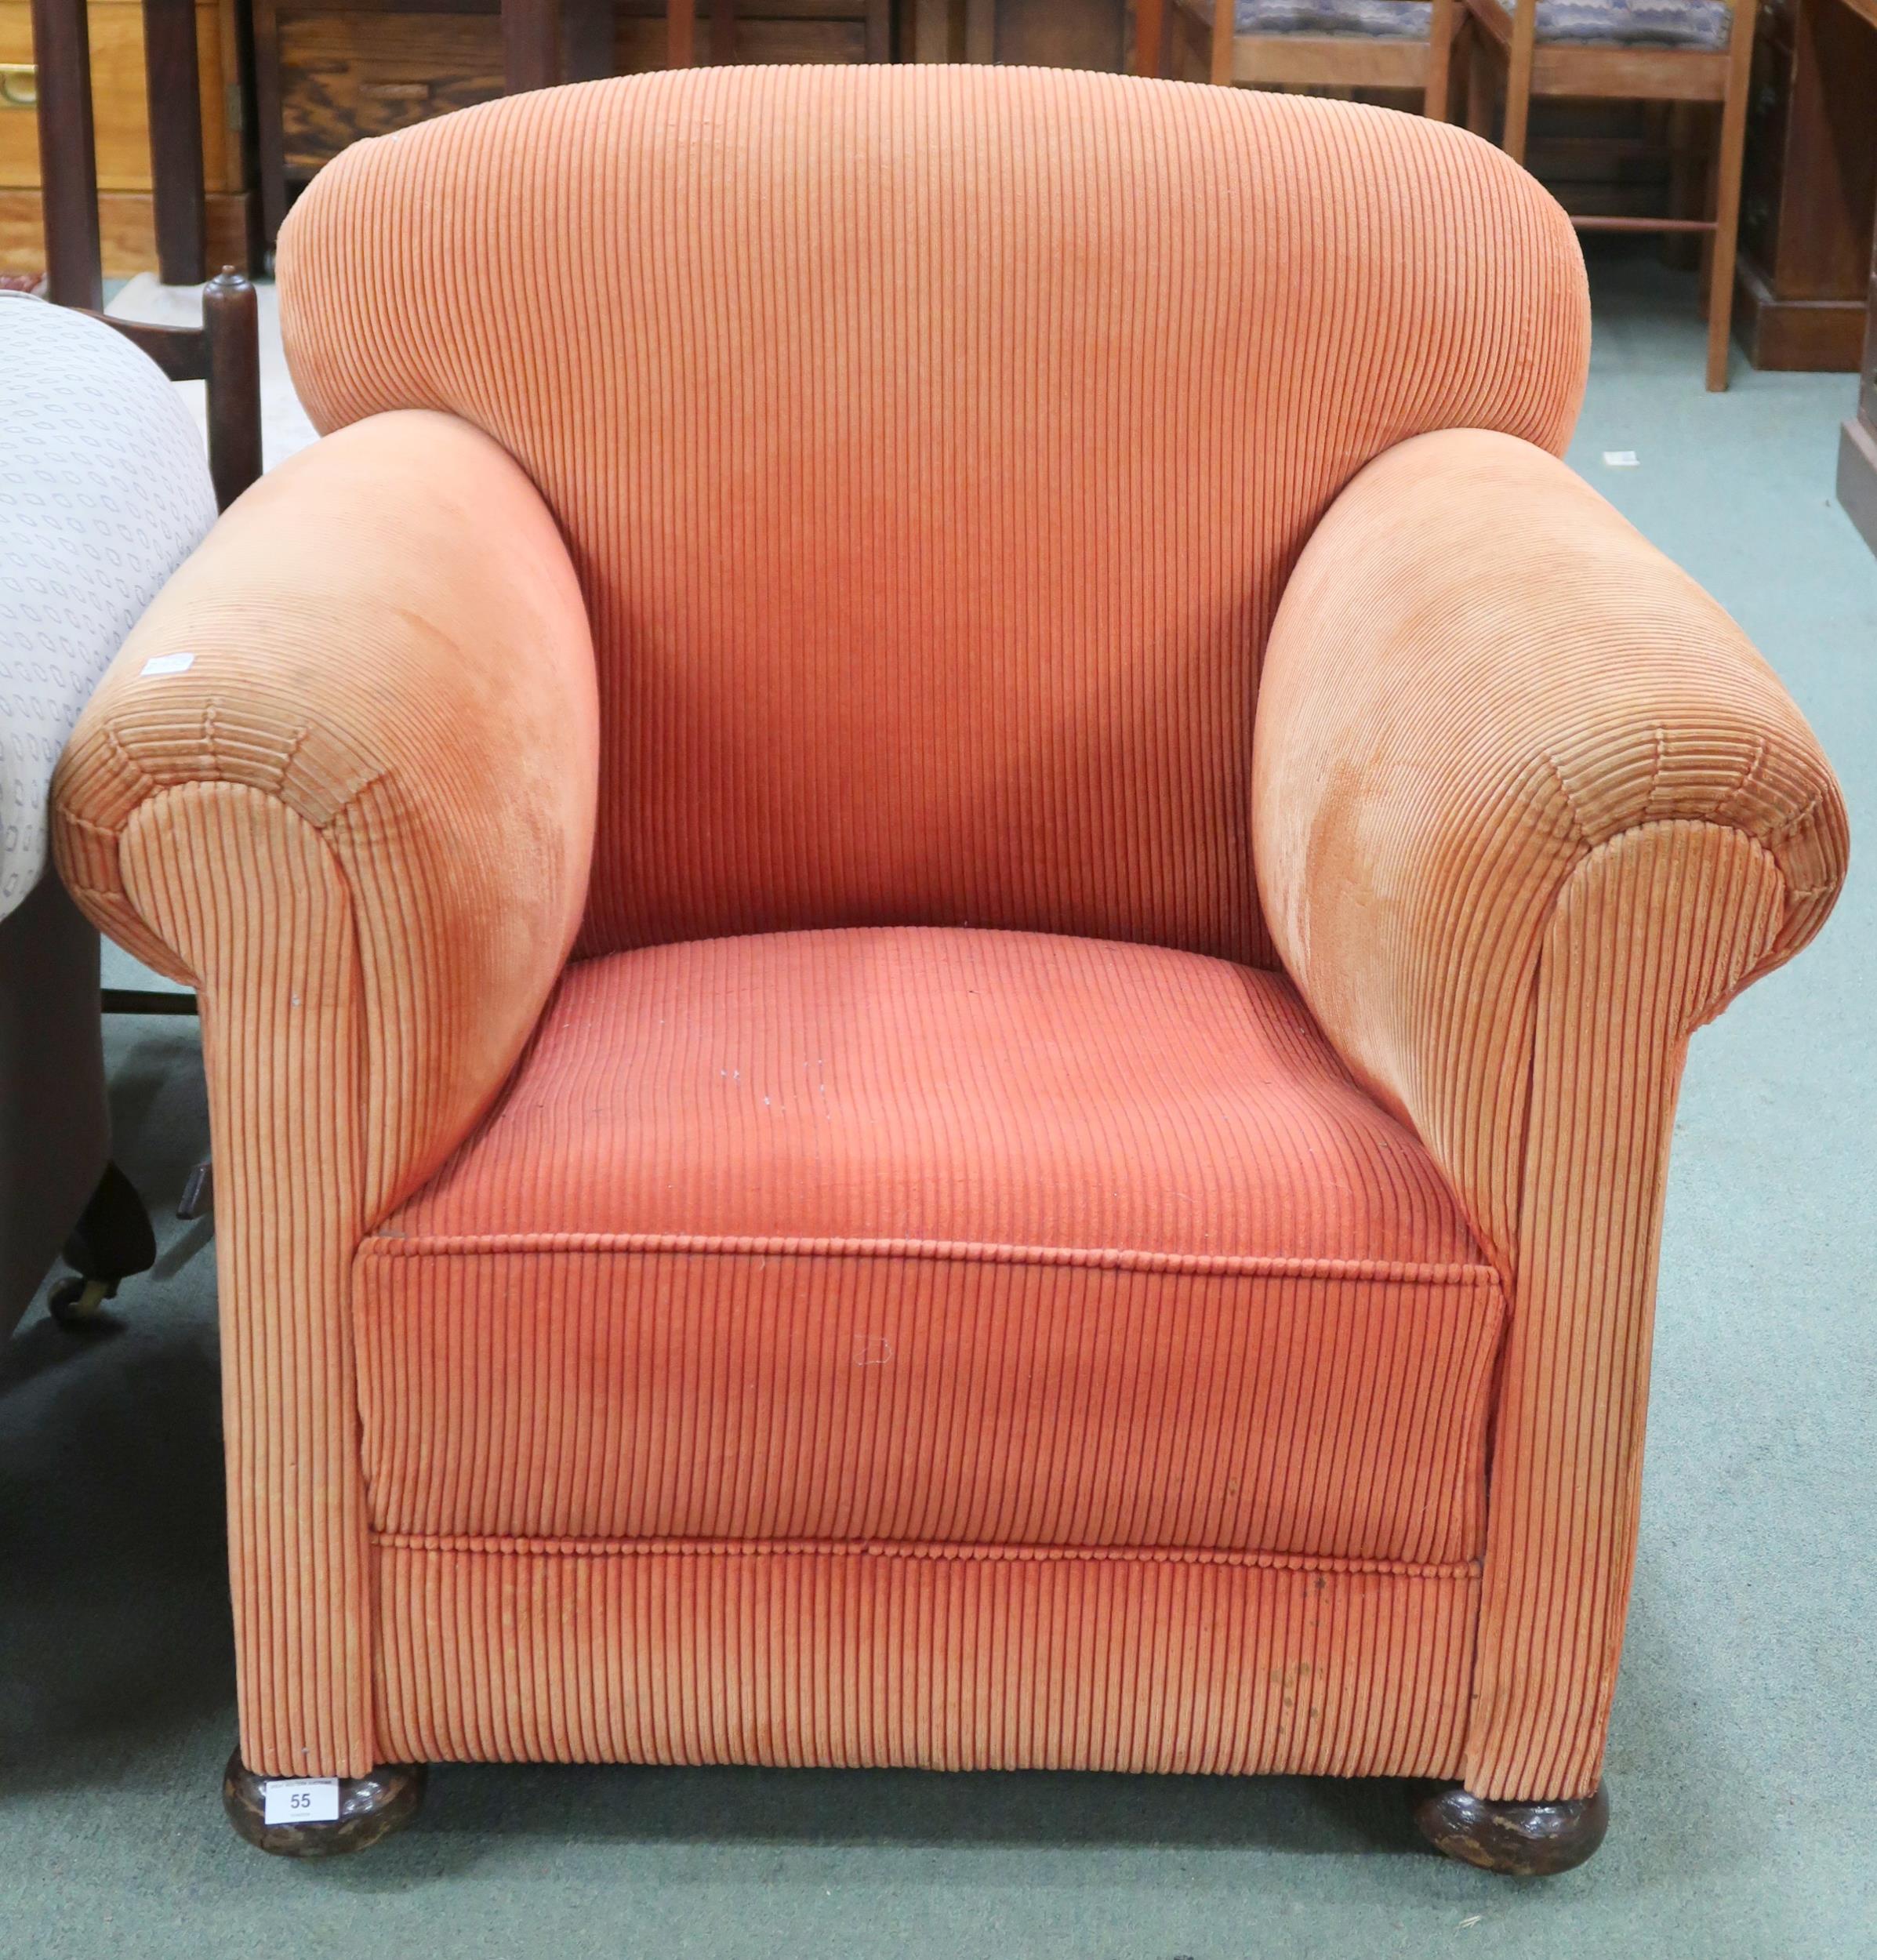 An early 20th century cord upholstery scroll arm chair on bun feet, 79cm high x 88cm wide x 93cm